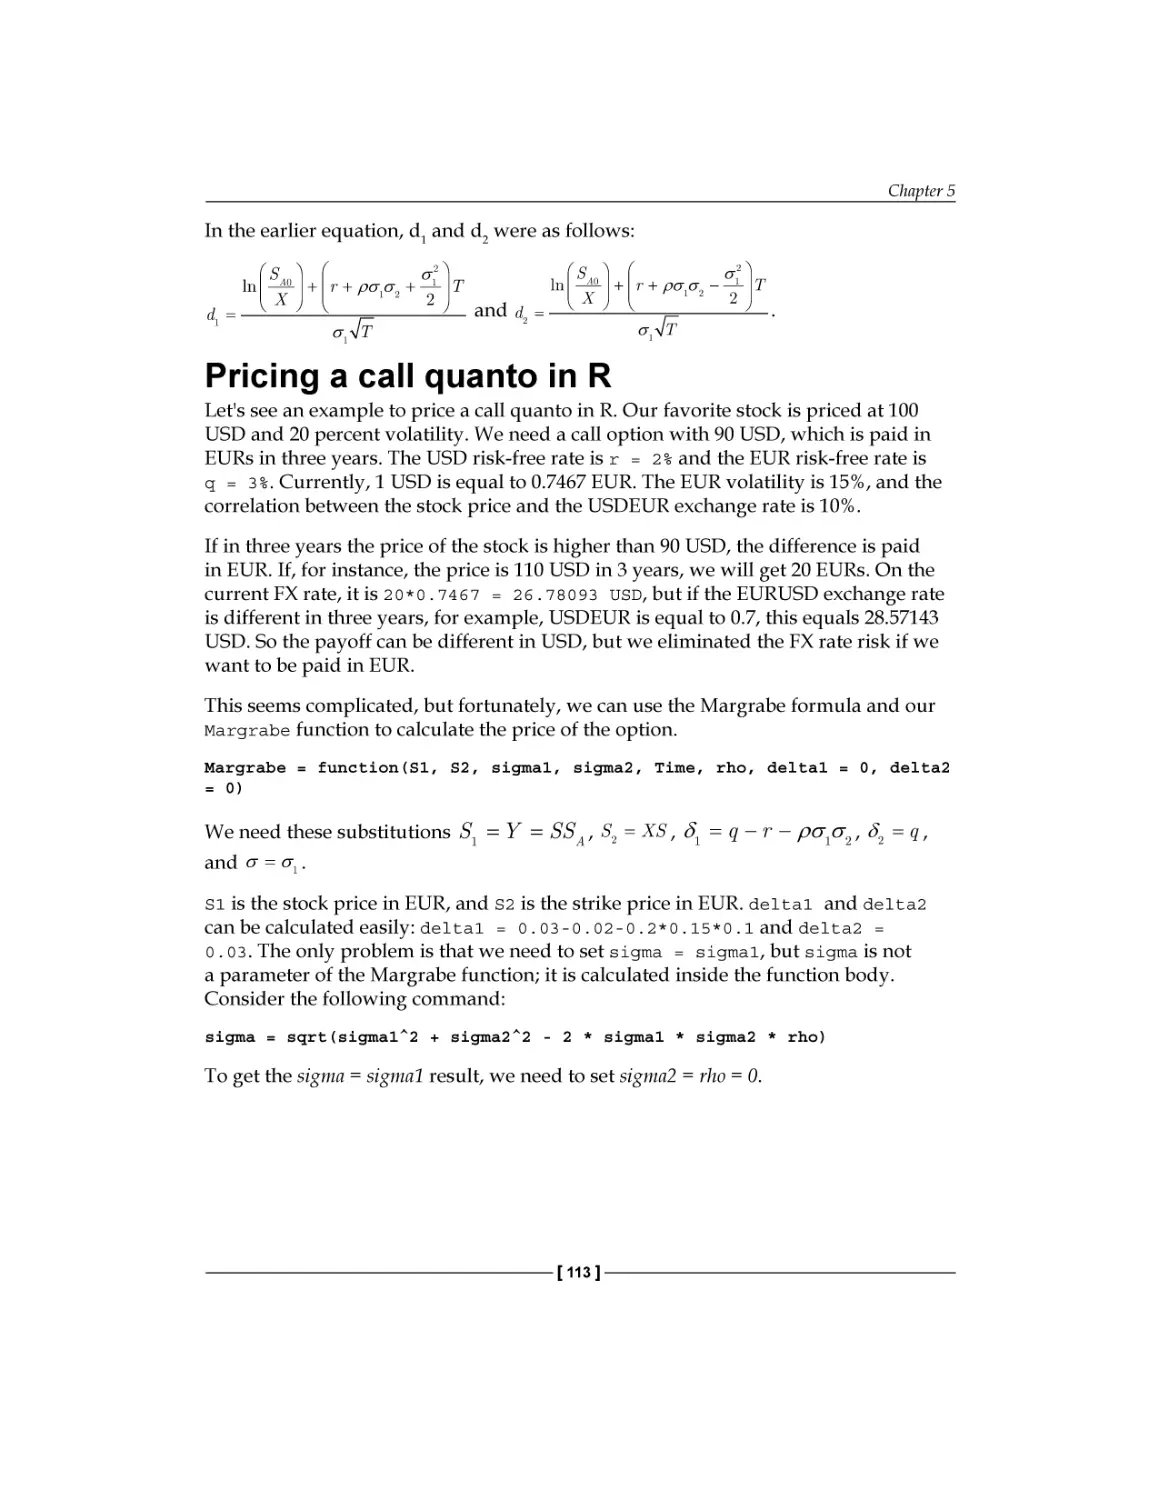 Pricing a call quanto in R